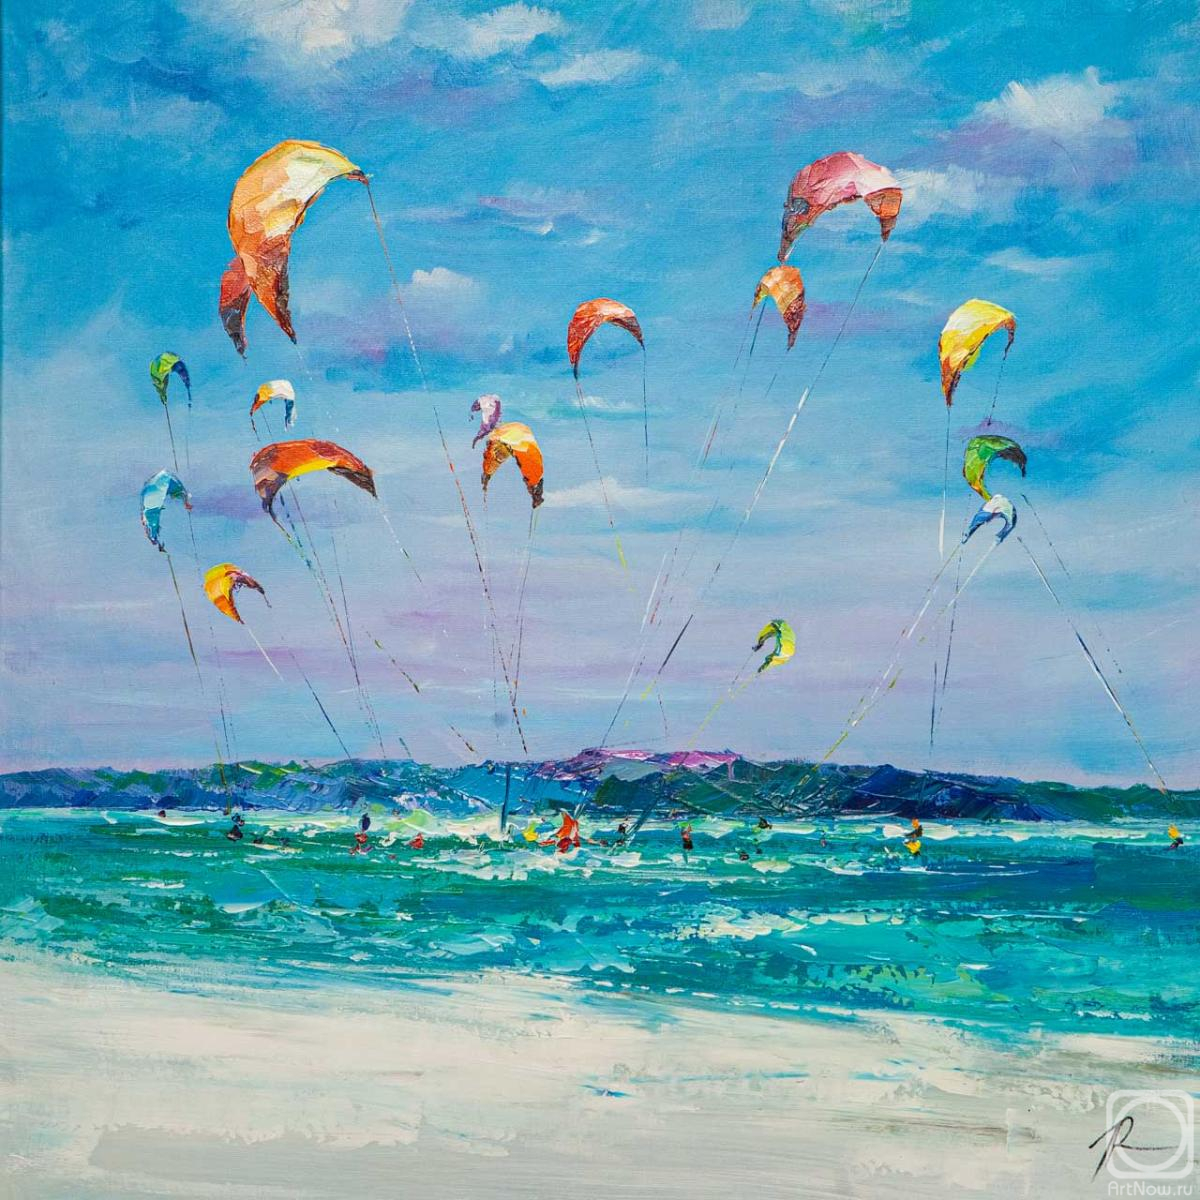 Rodries Jose. Kitesurfing in the turquoise sea